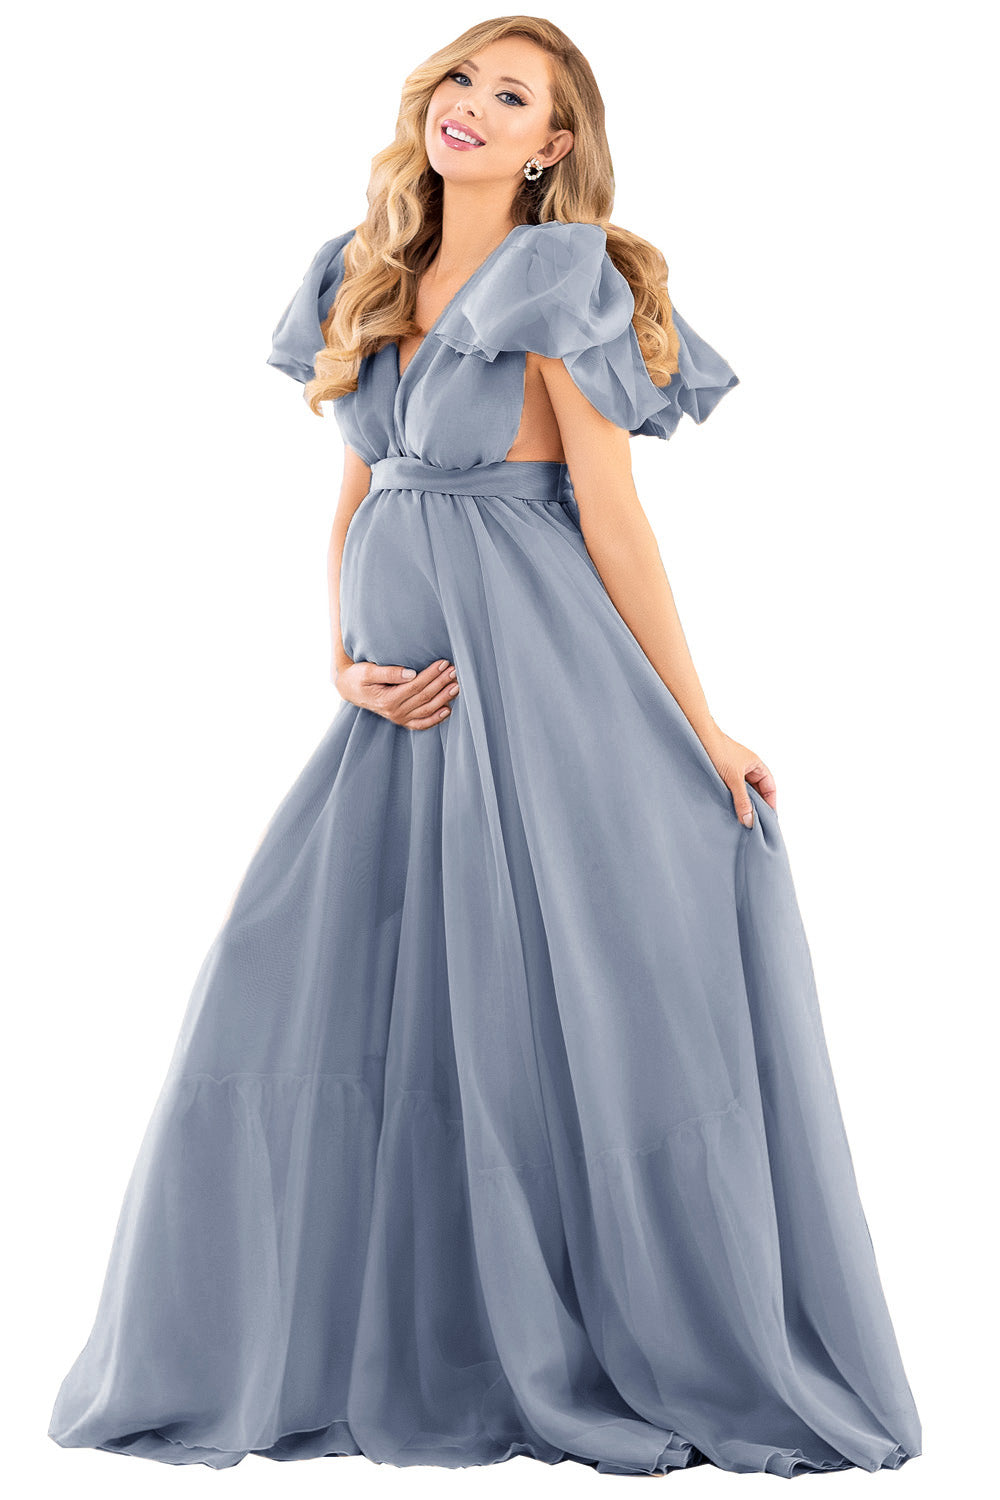 maternity dress baby shower